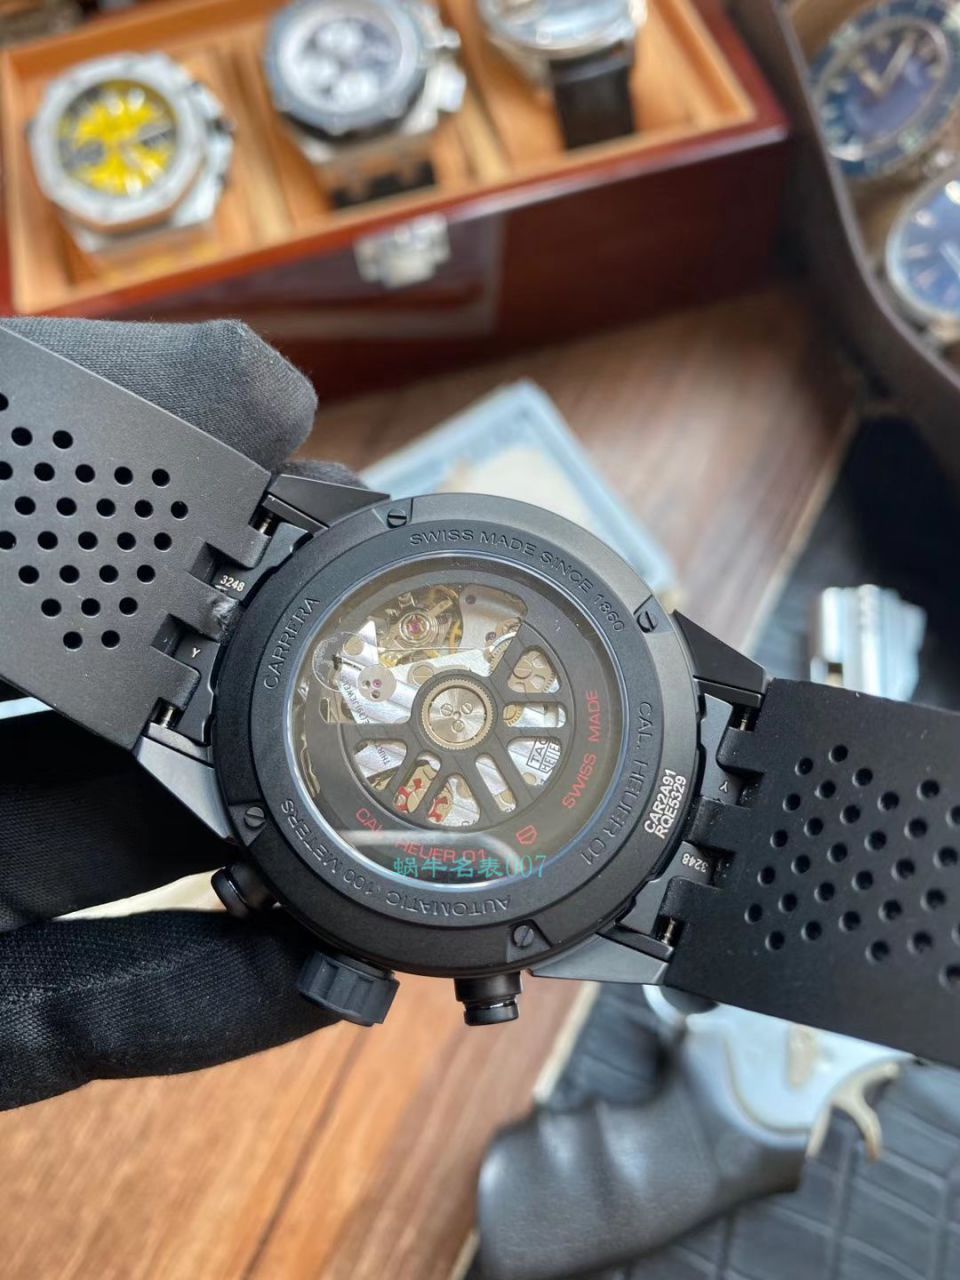 XF厂顶级复刻手表泰格豪雅卡莱拉陶瓷黑骑士 / TG103XF